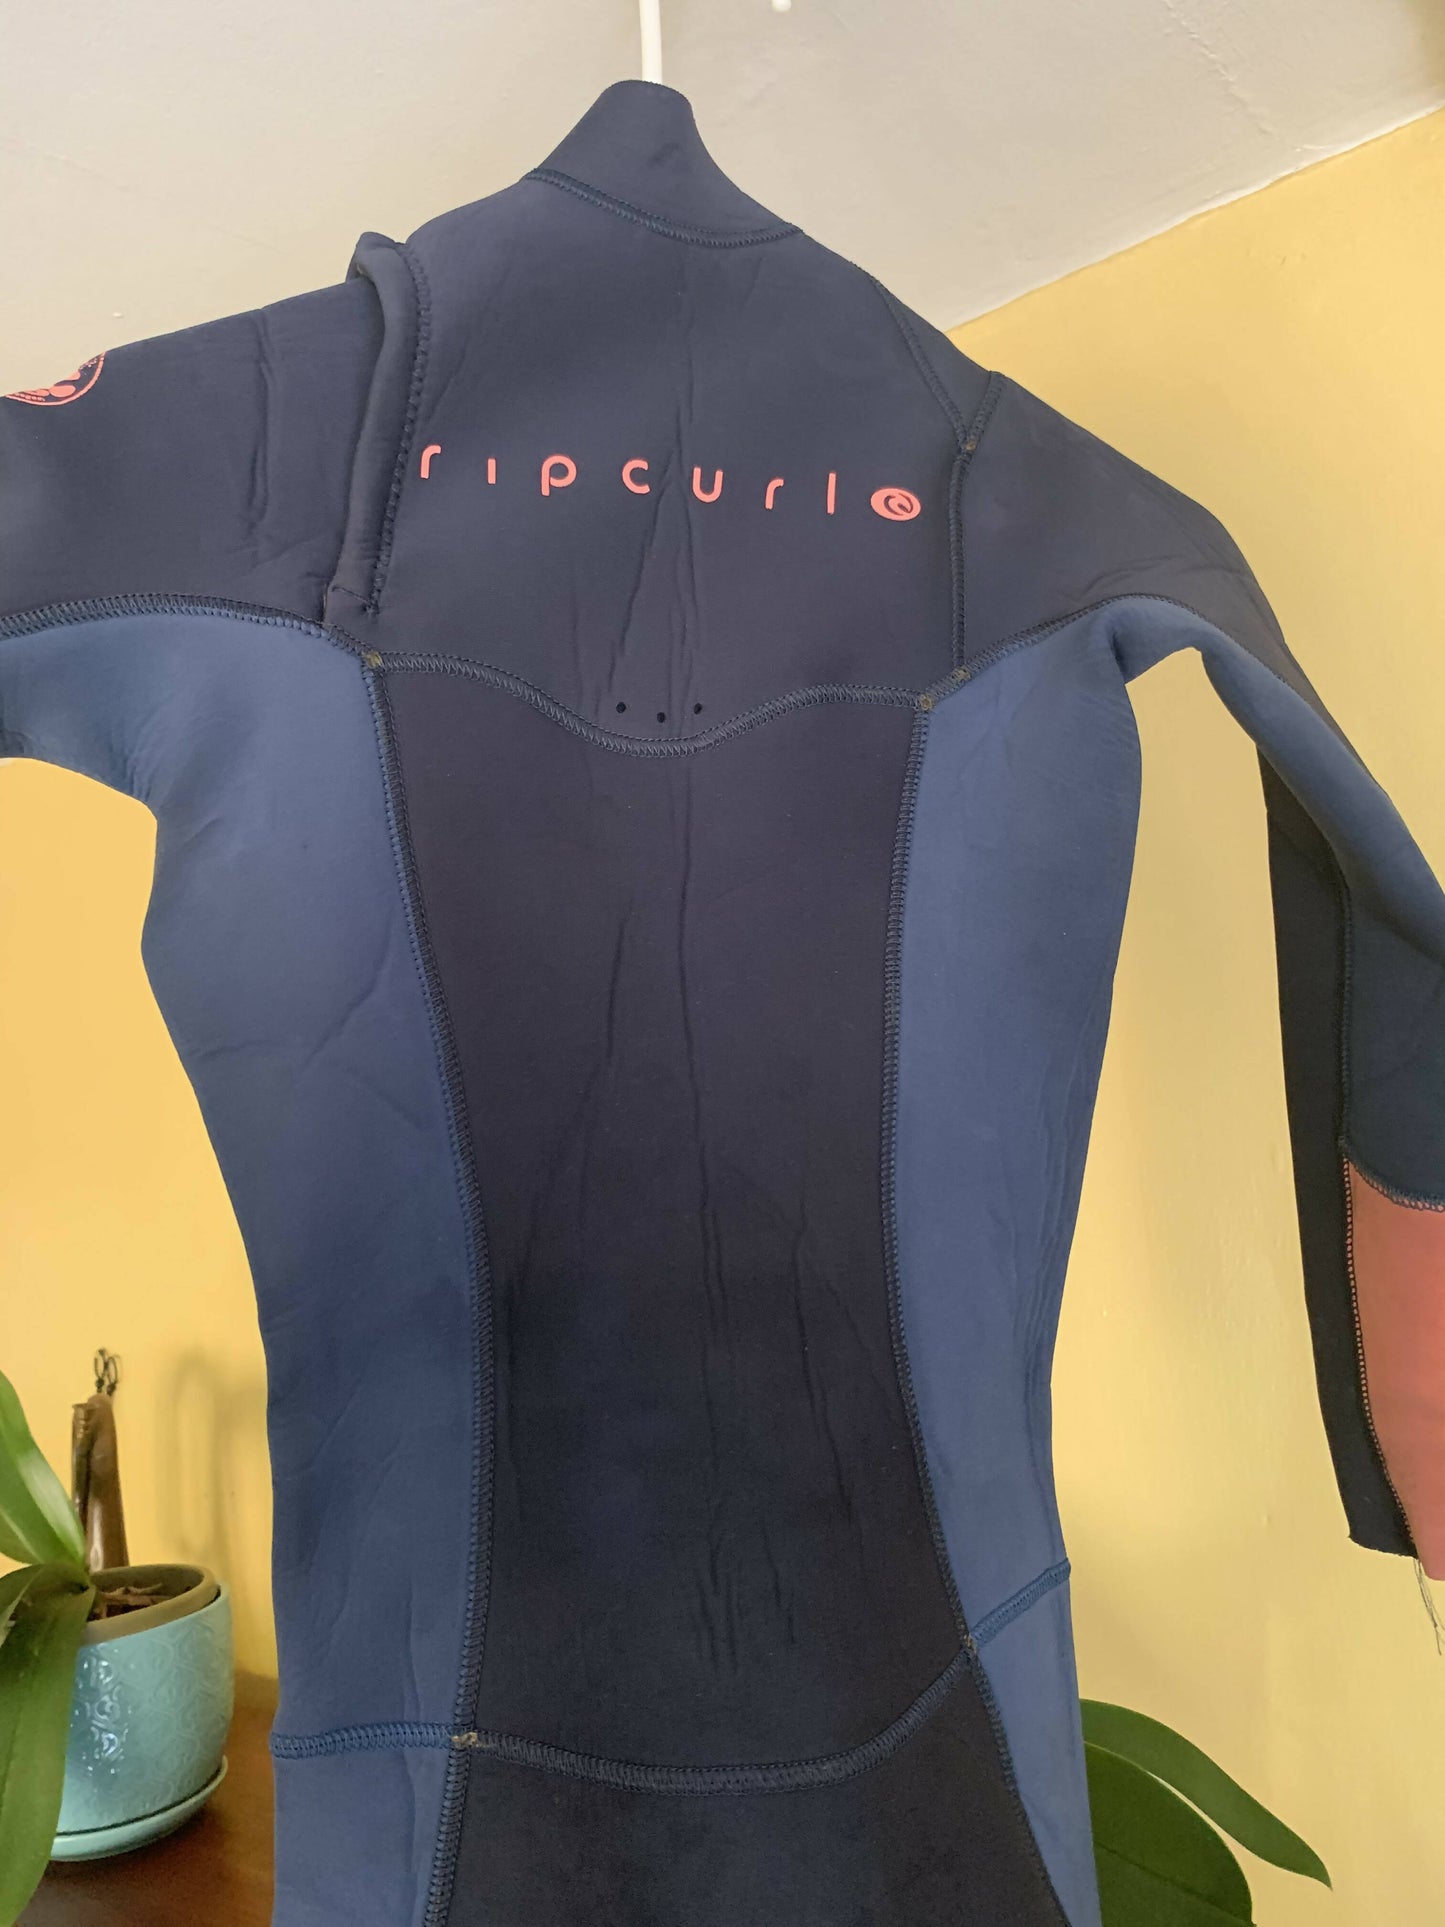 Ripcurl Dawn Patrol 4/3 wetsuit. Size 4